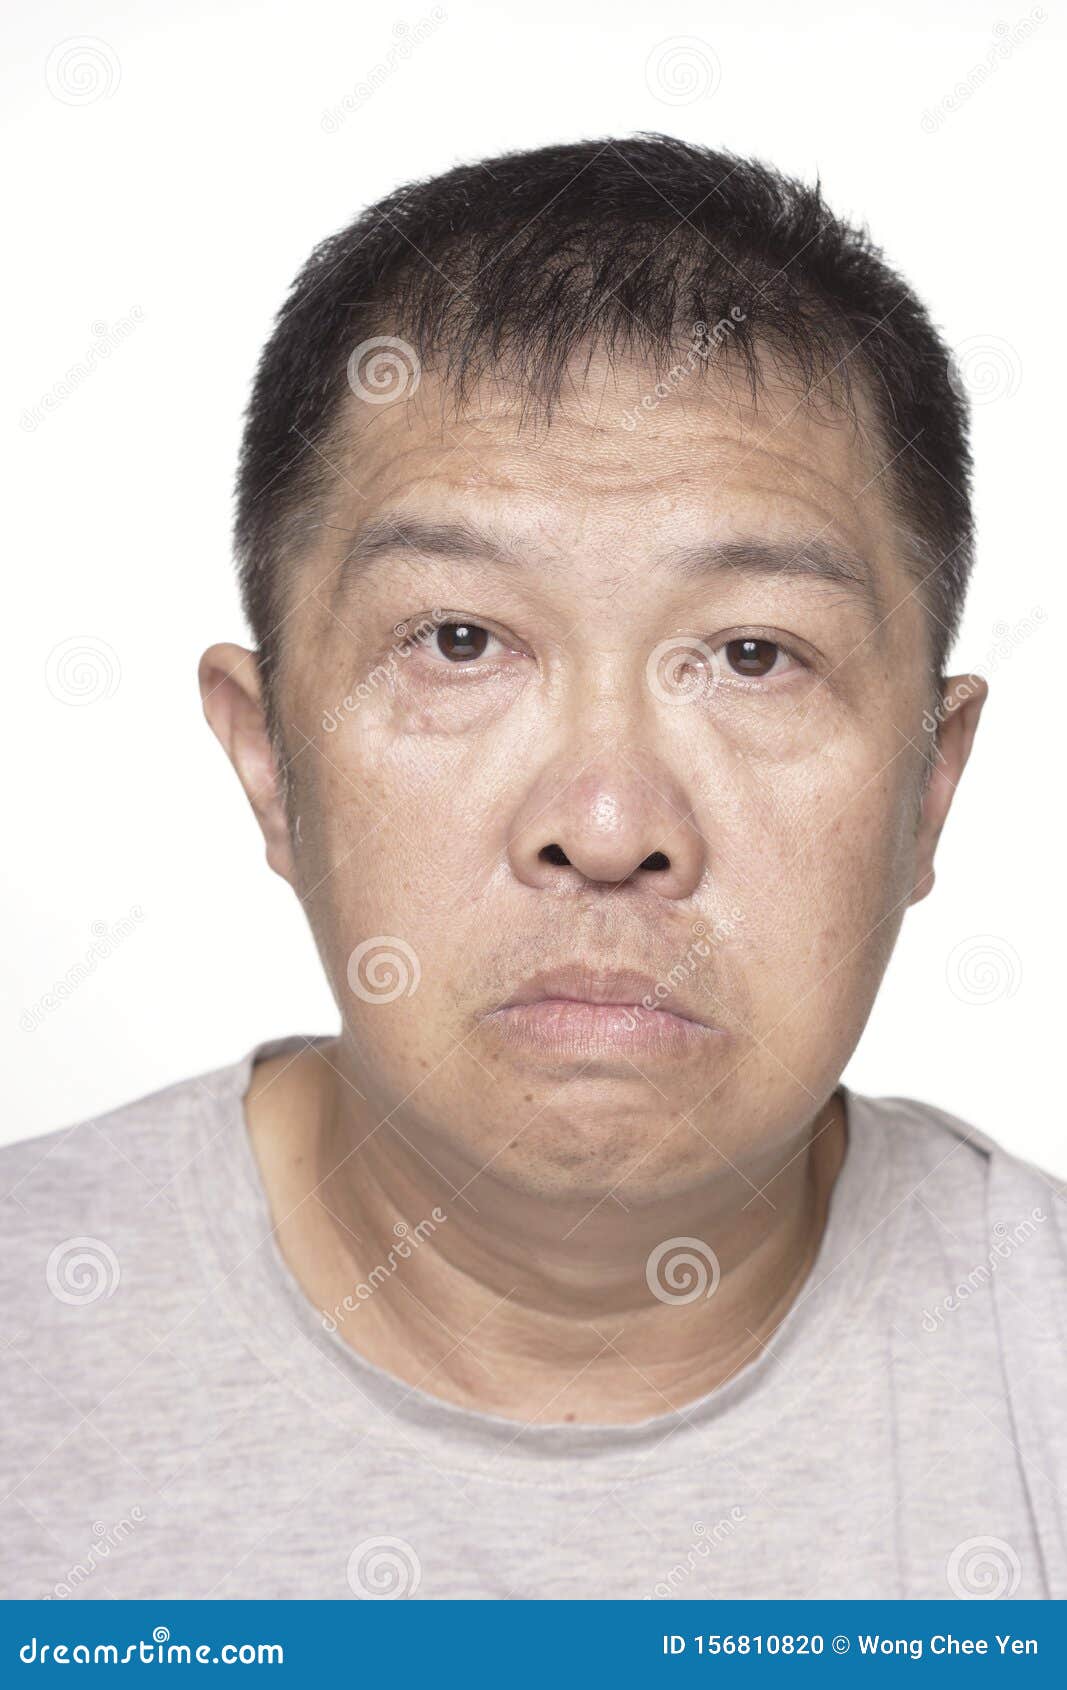 sad-man-glum-expression-male-chinese-asi